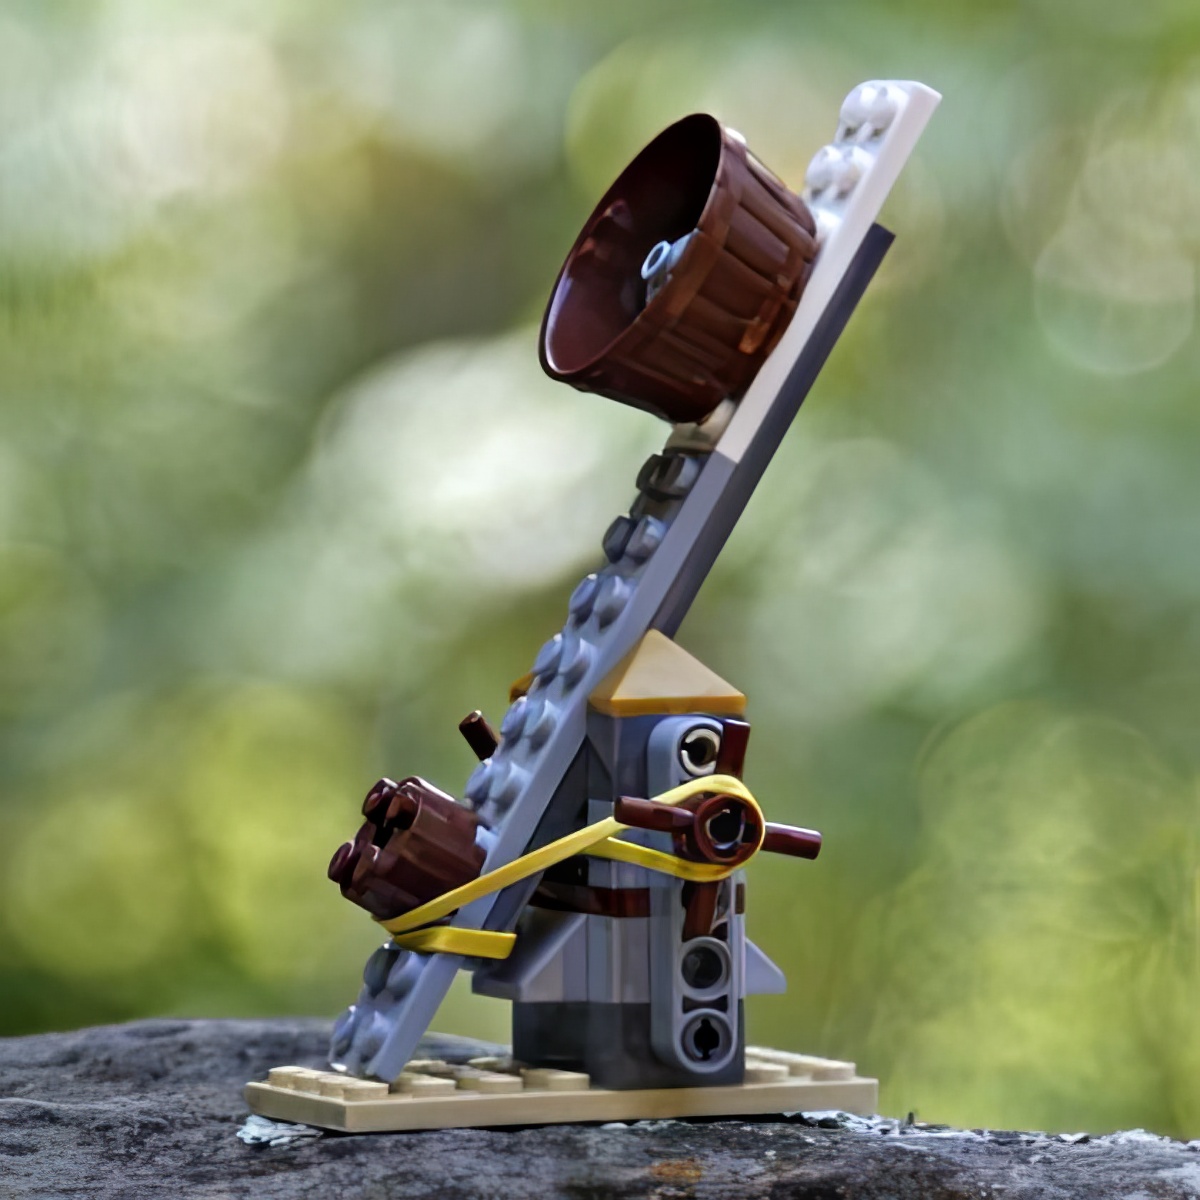 LEGO catapult